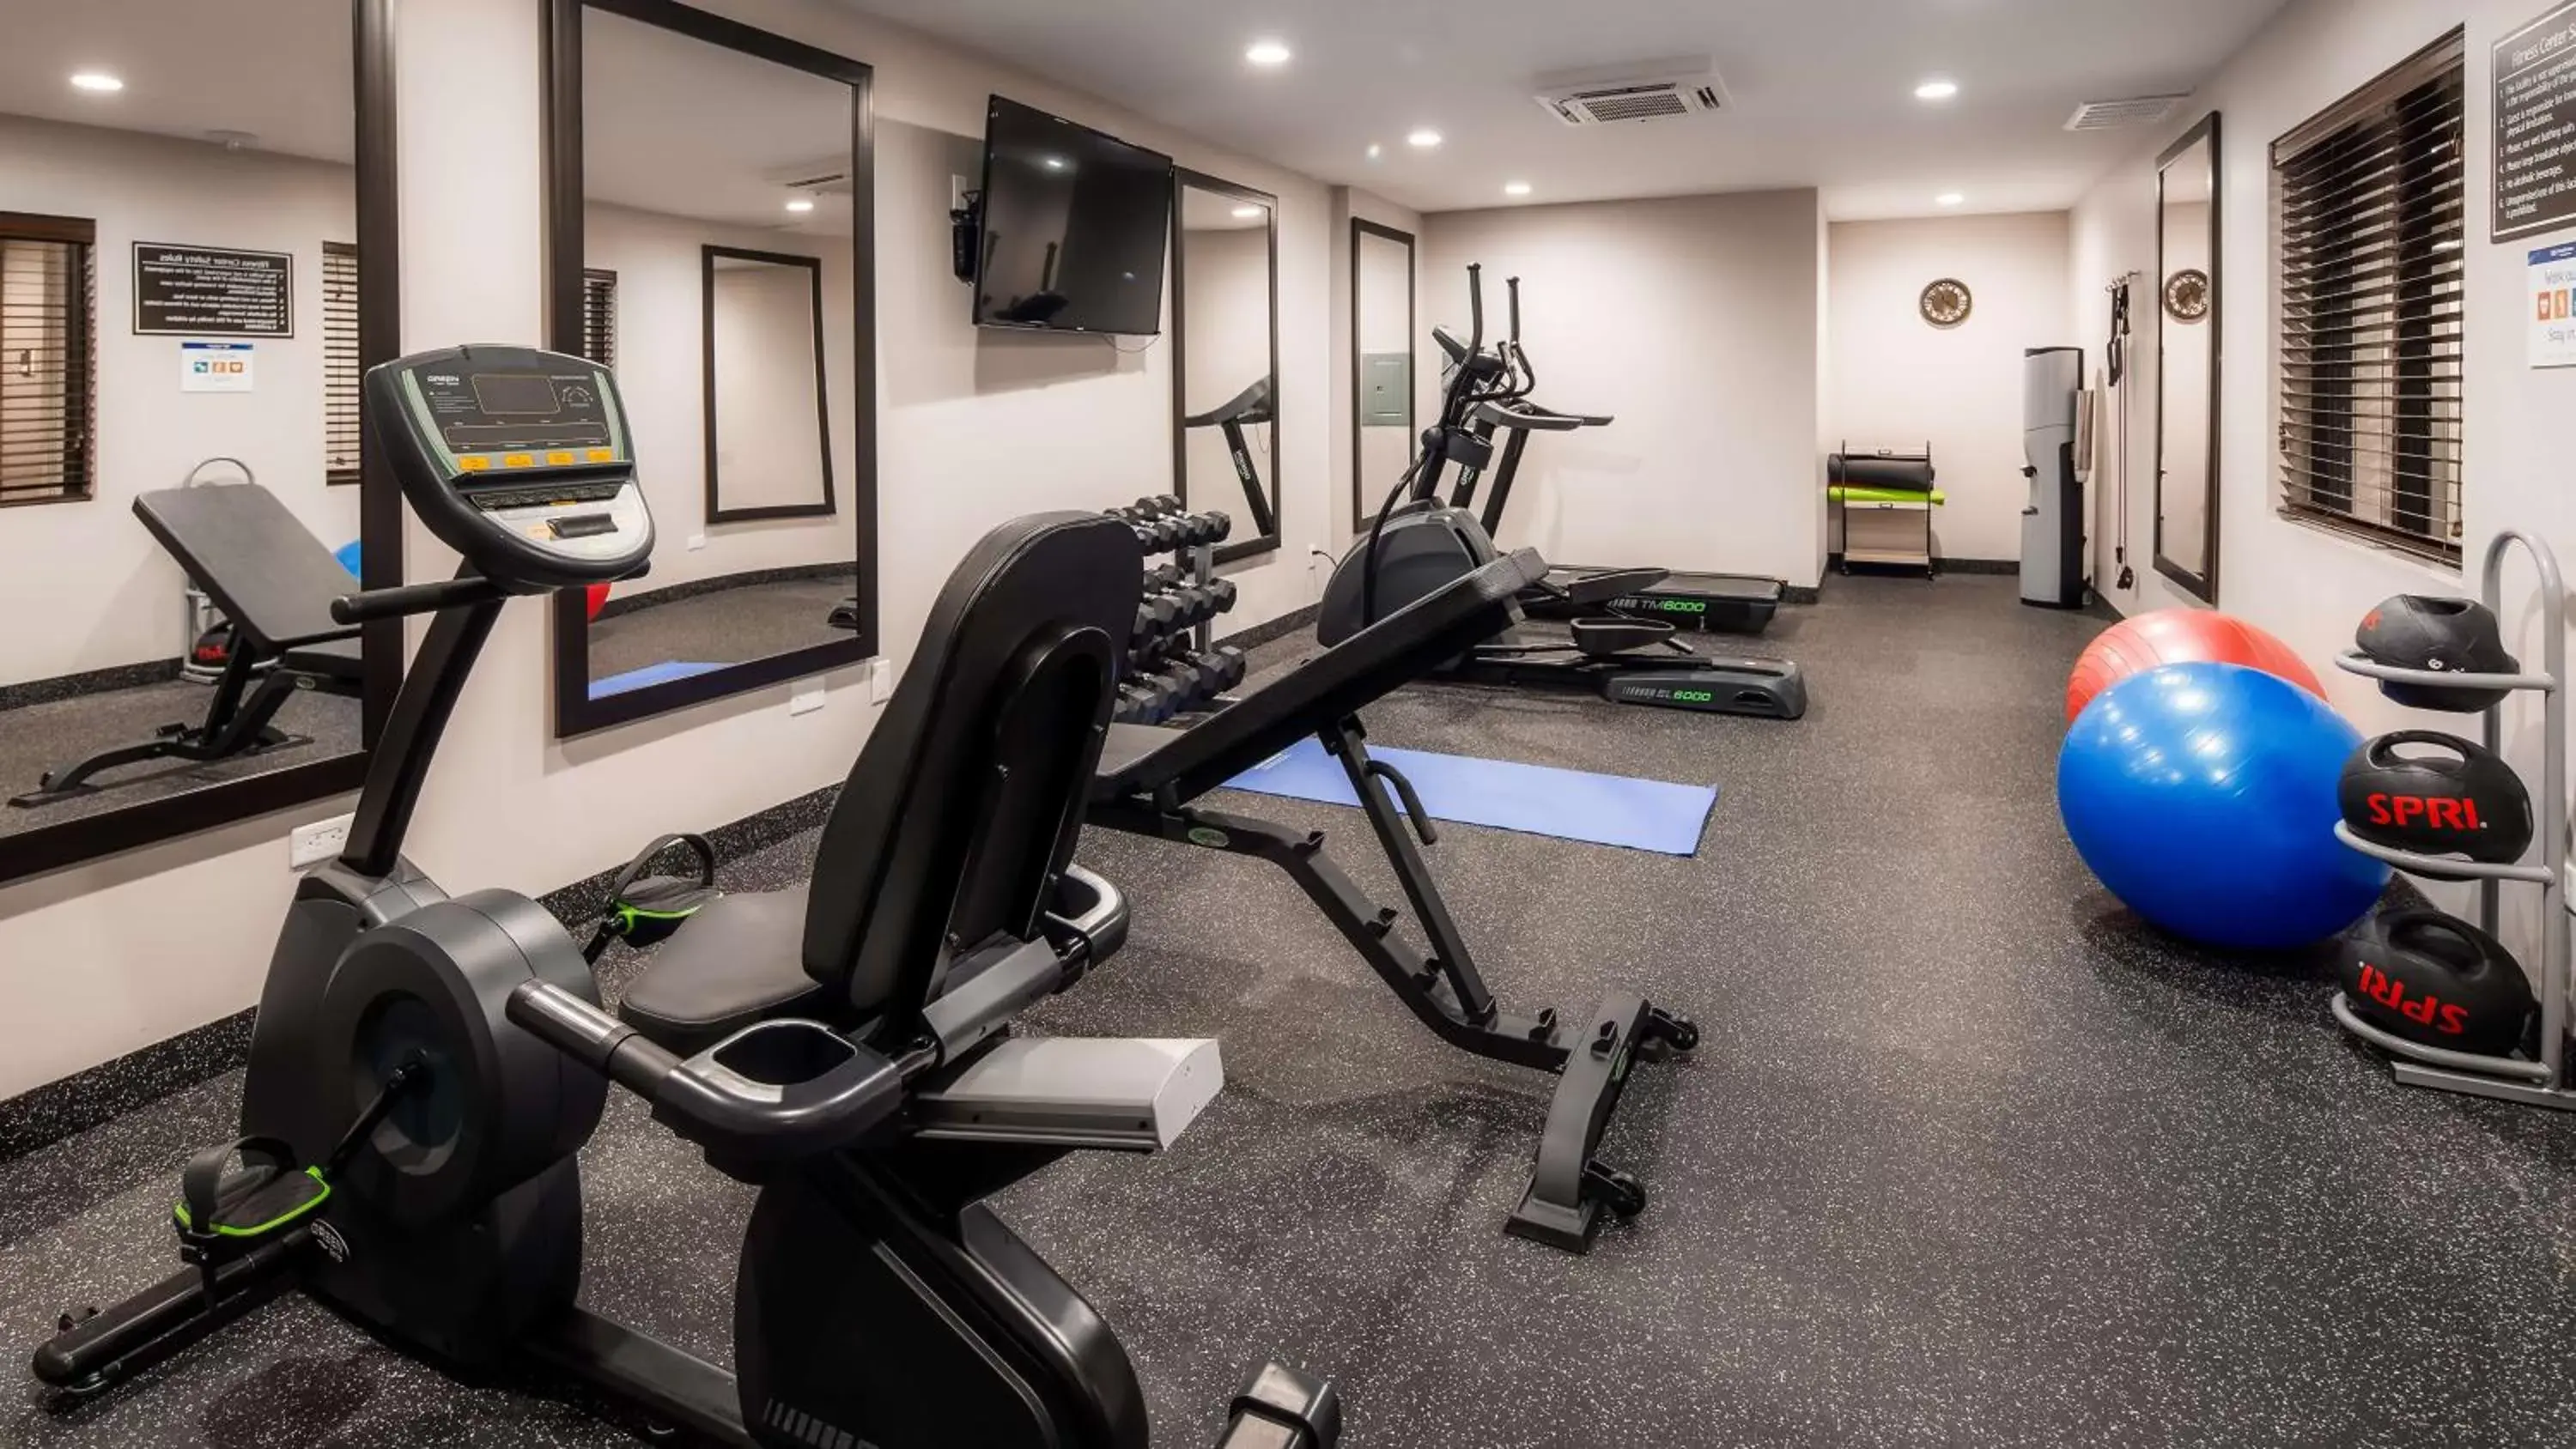 Fitness centre/facilities, Fitness Center/Facilities in Best Western Sevierville/Kodak Inn